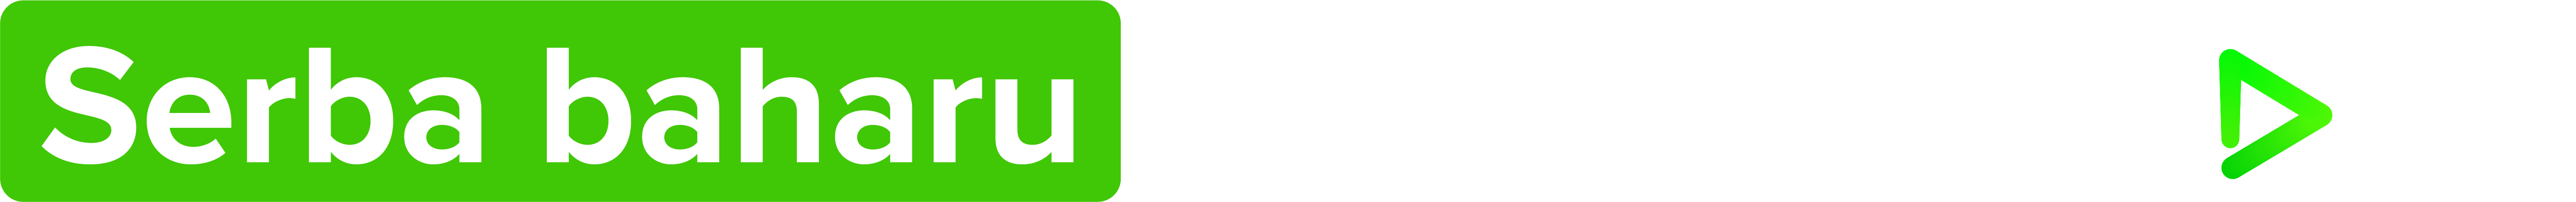 All-new Maxis Postpaid